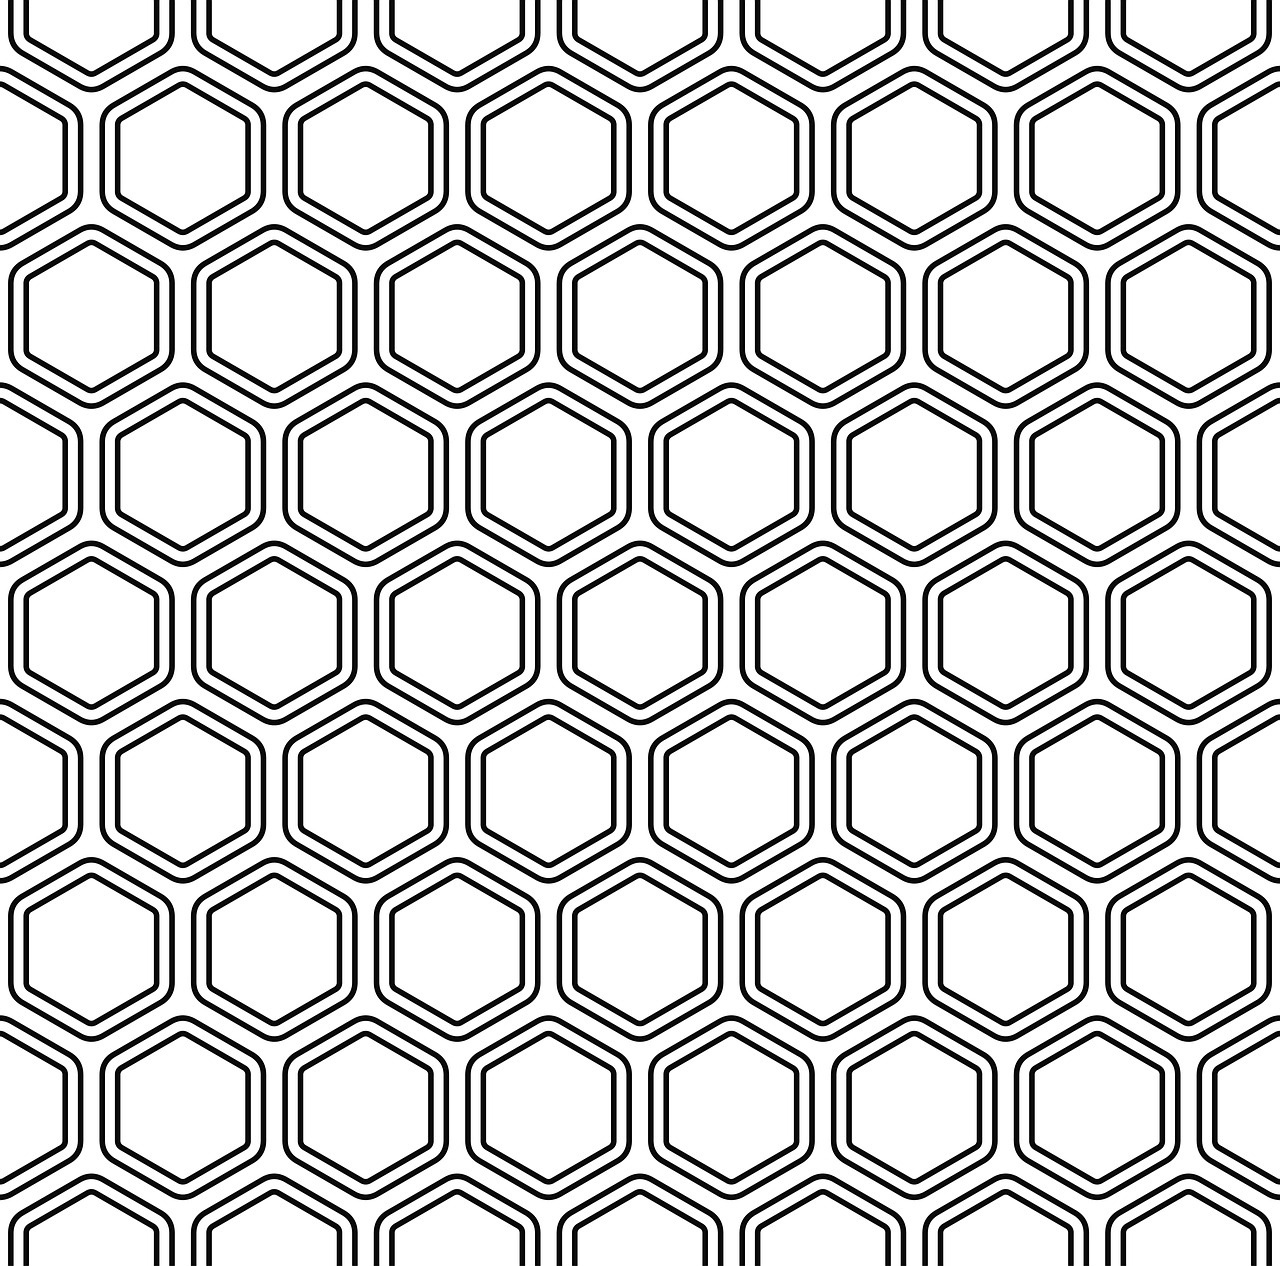 photoshop hexagon pattern download